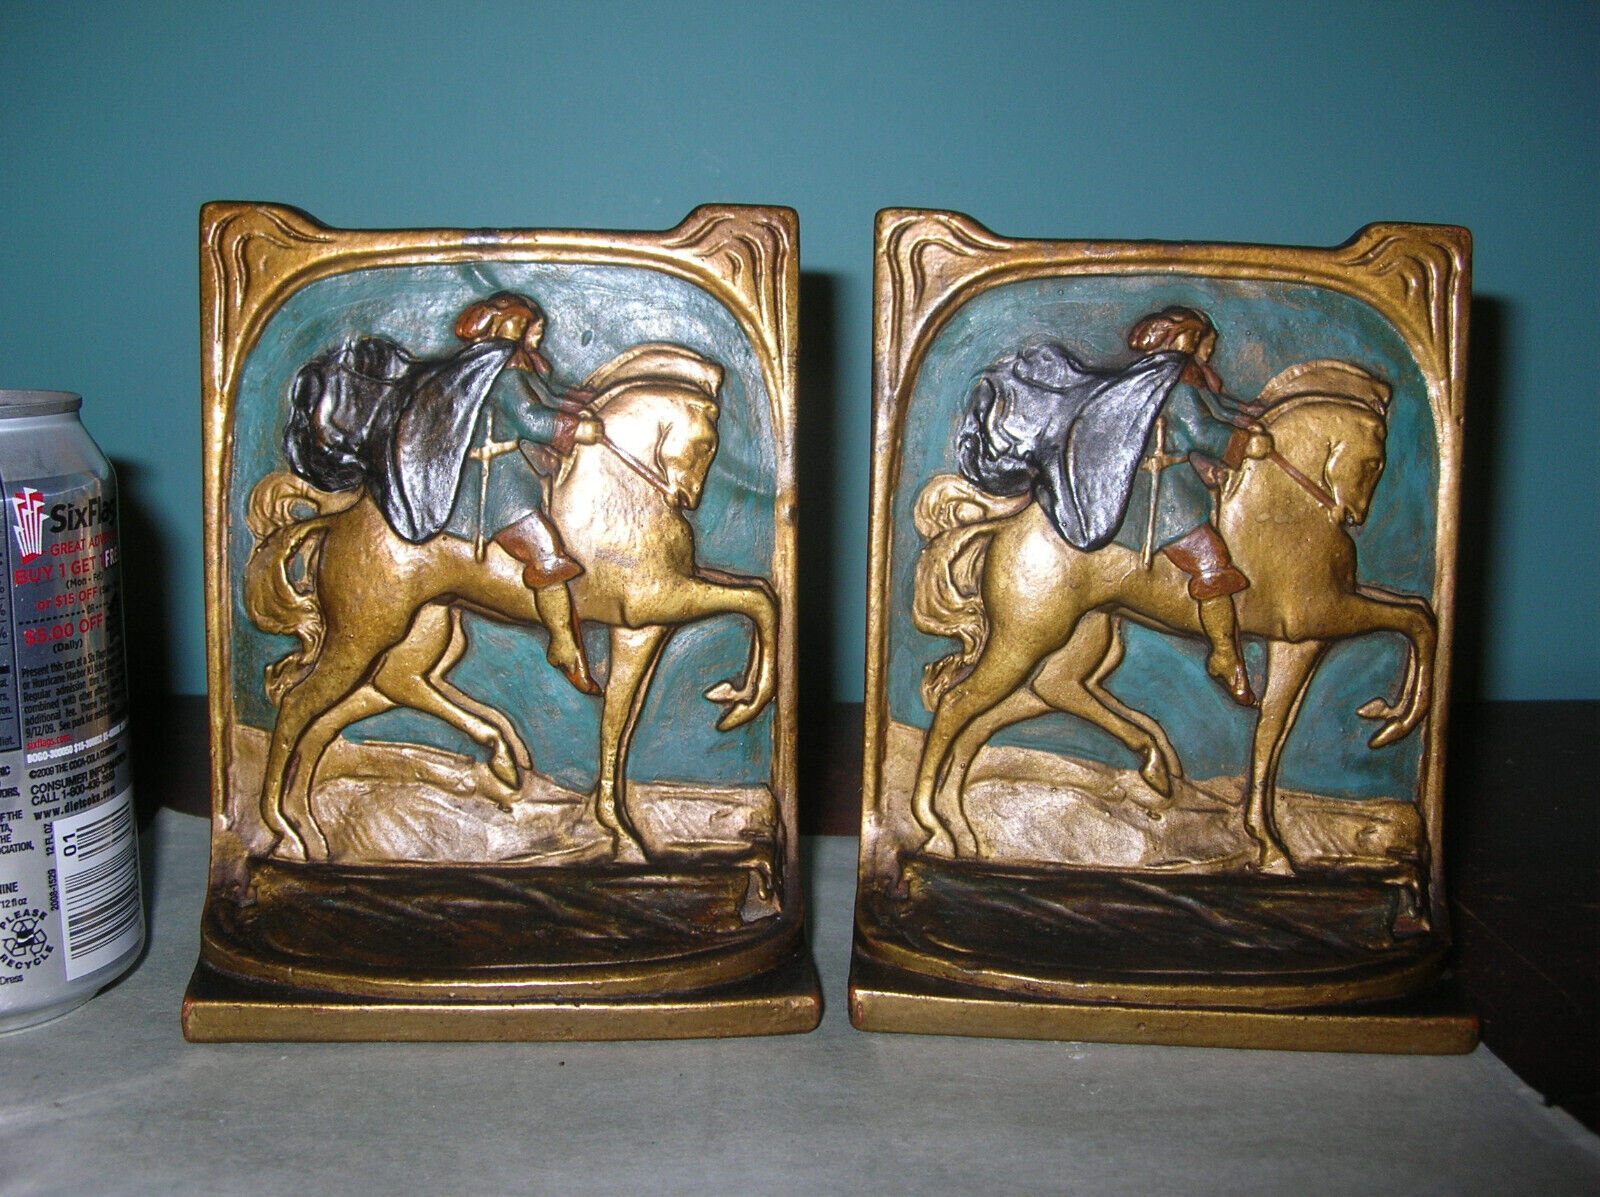 Antique The Knight armor horse bookends Galvano Bronze clad, original paint